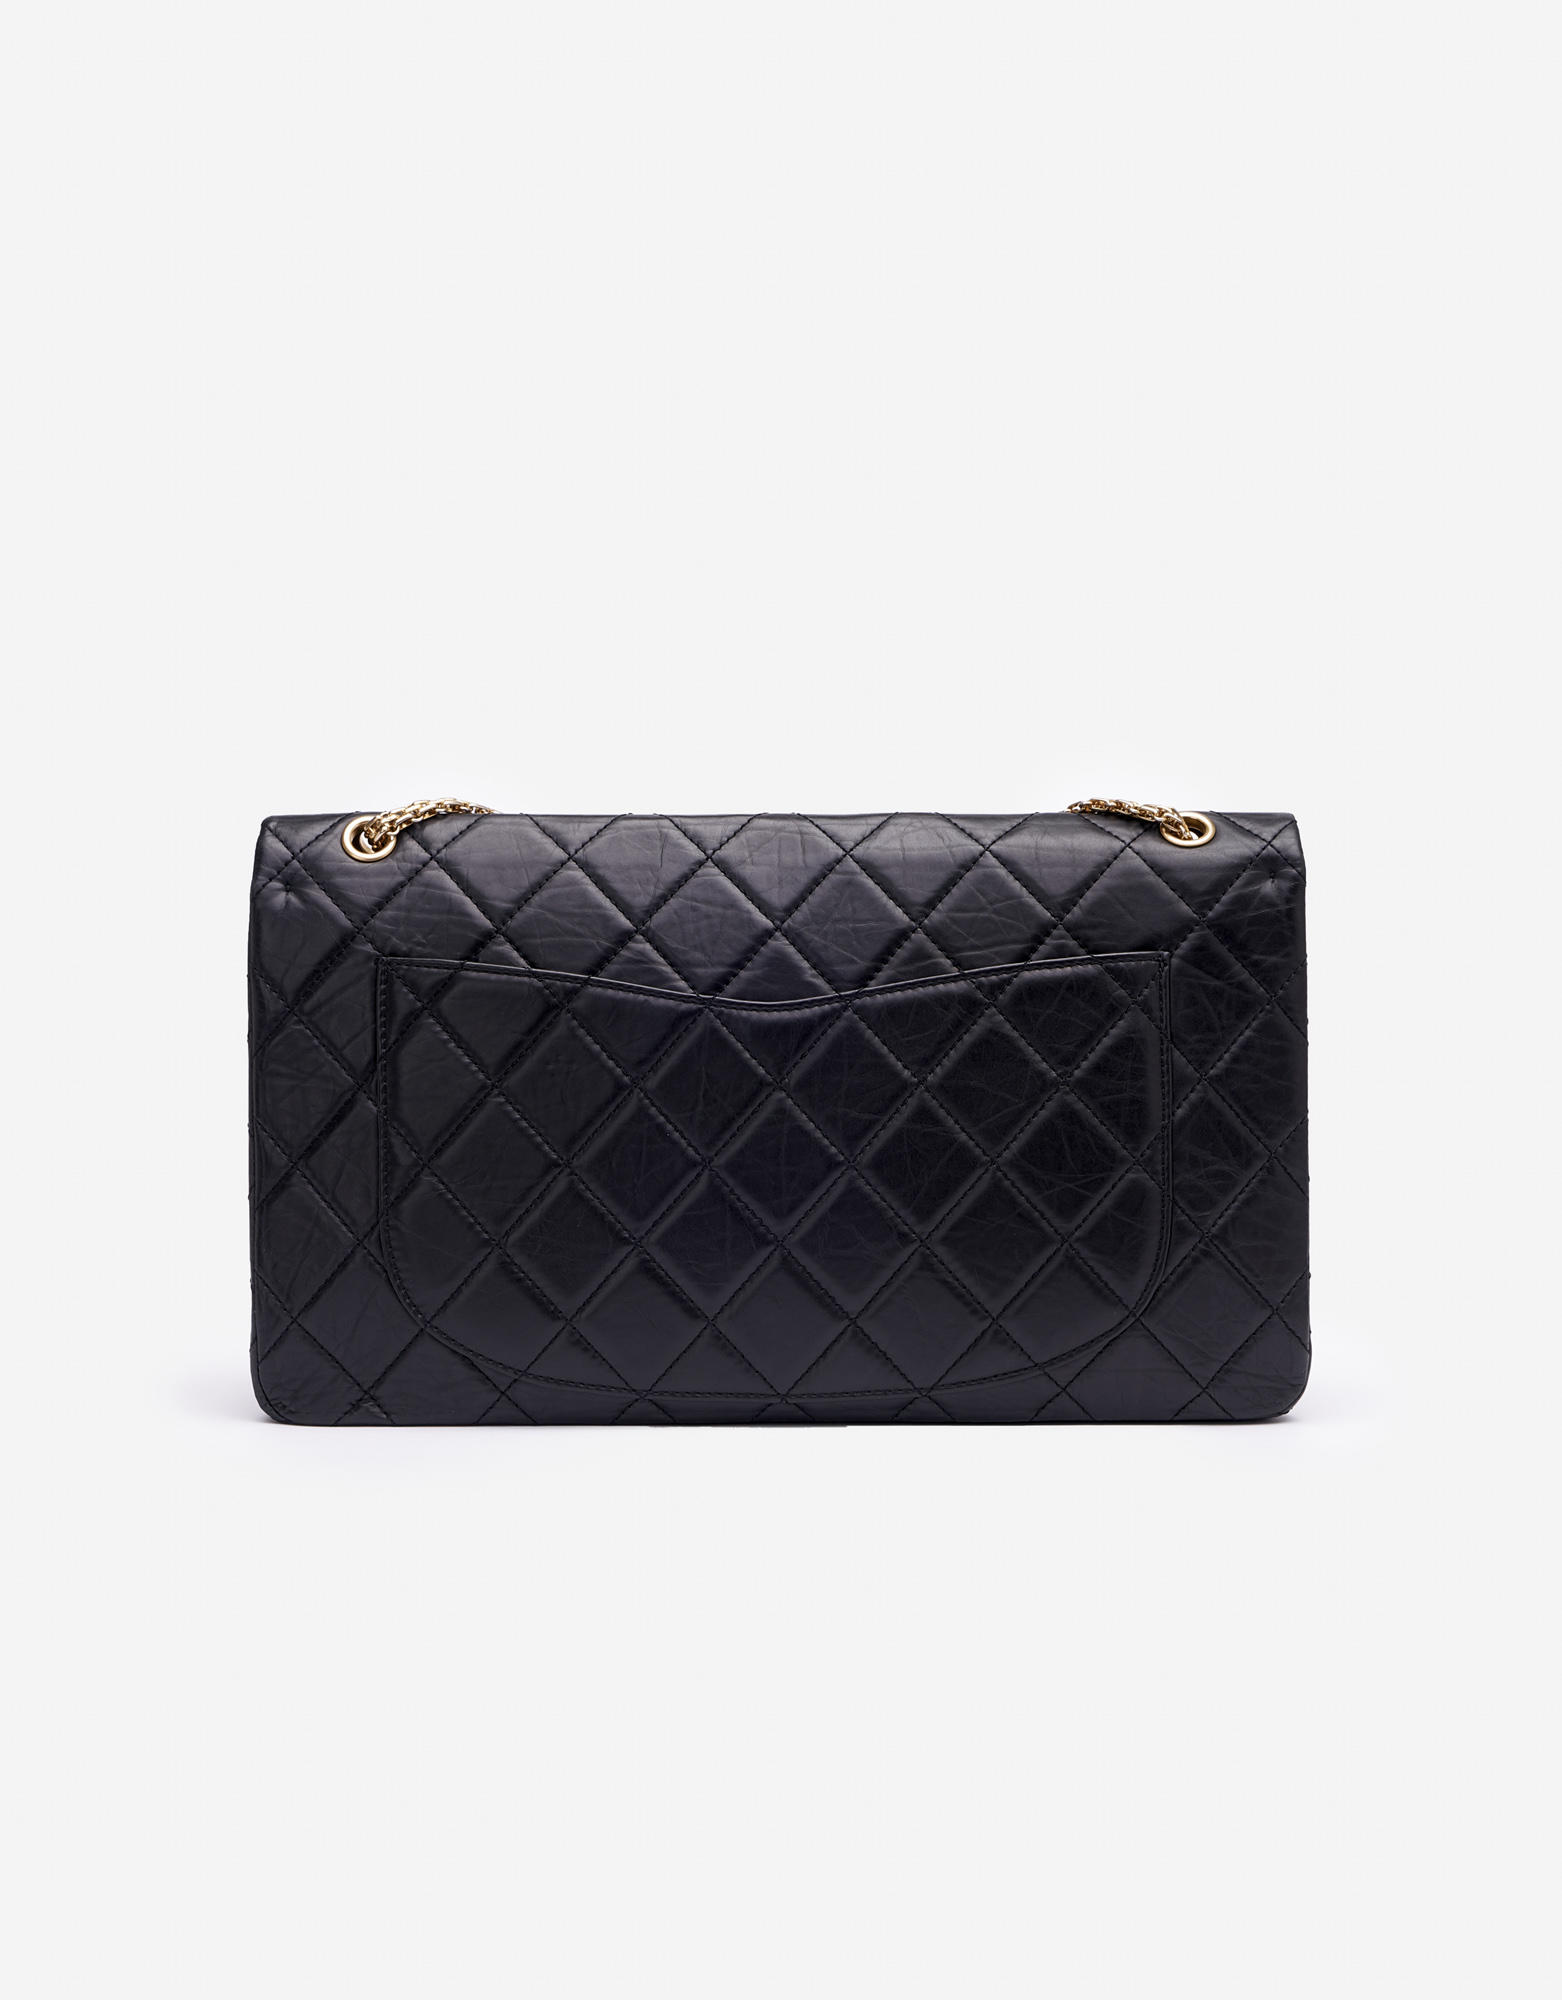 Chanel Black Patent Leather 2.55 Reissue Flap Wallet Black Hardware, 2020 (Like New), Womens Handbag